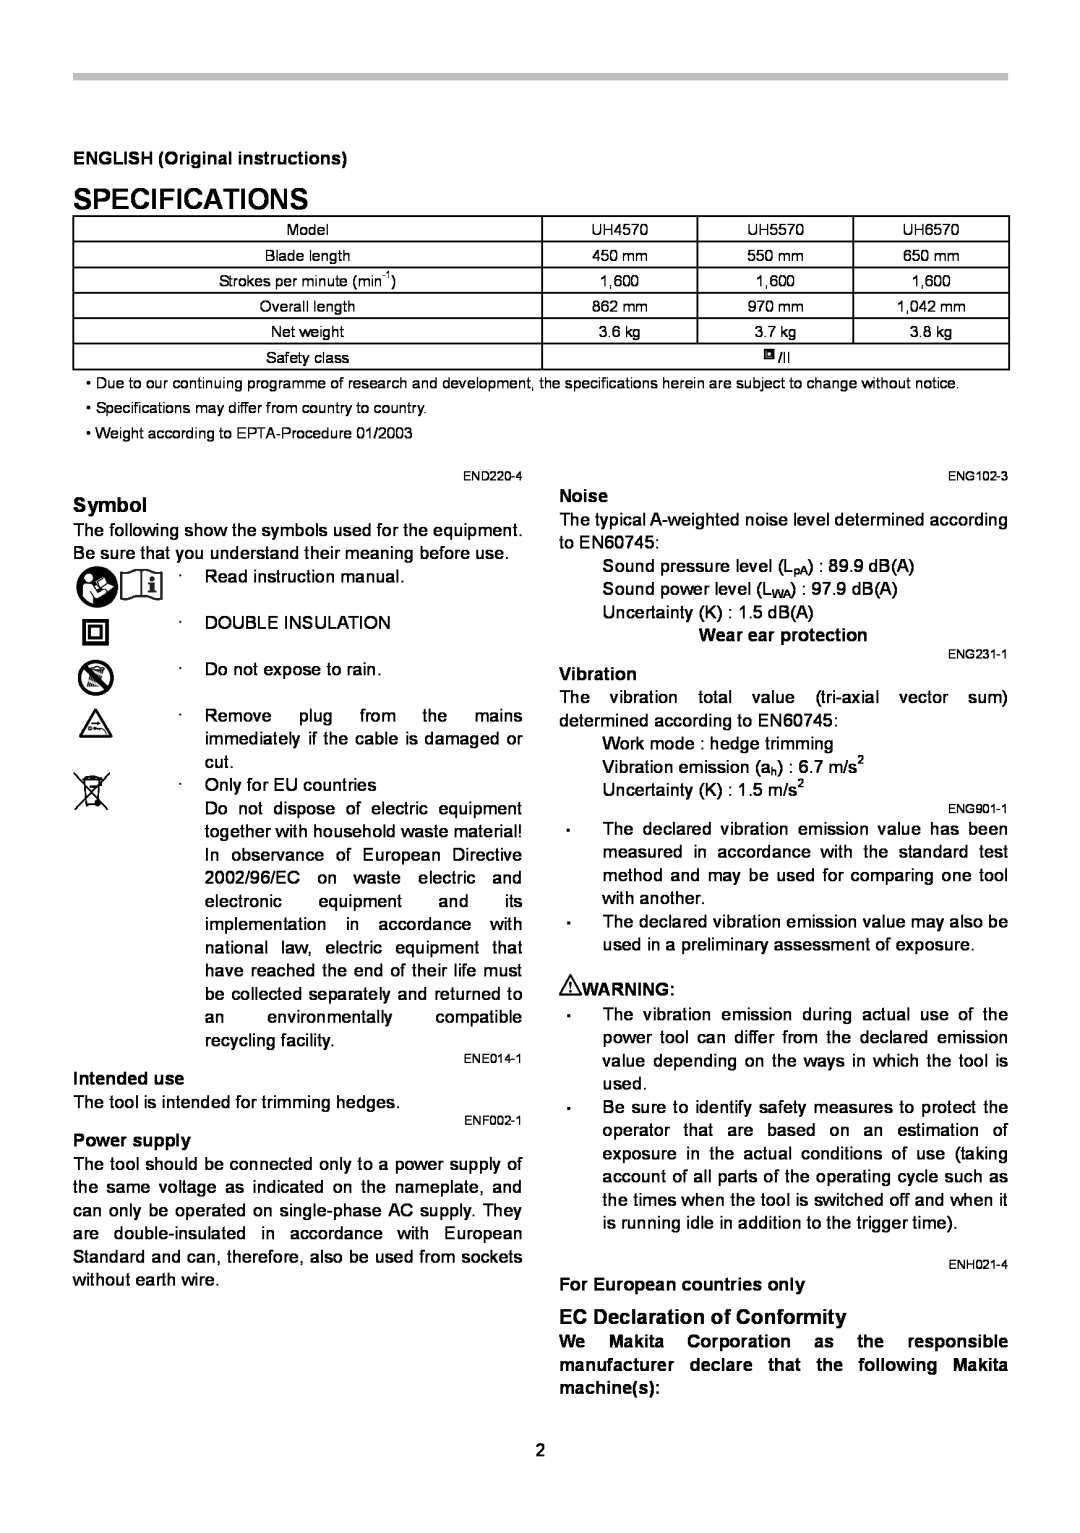 Makita UH4570, UH6570, UH5570 instruction manual Specifications, Symbol, EC Declaration of Conformity 